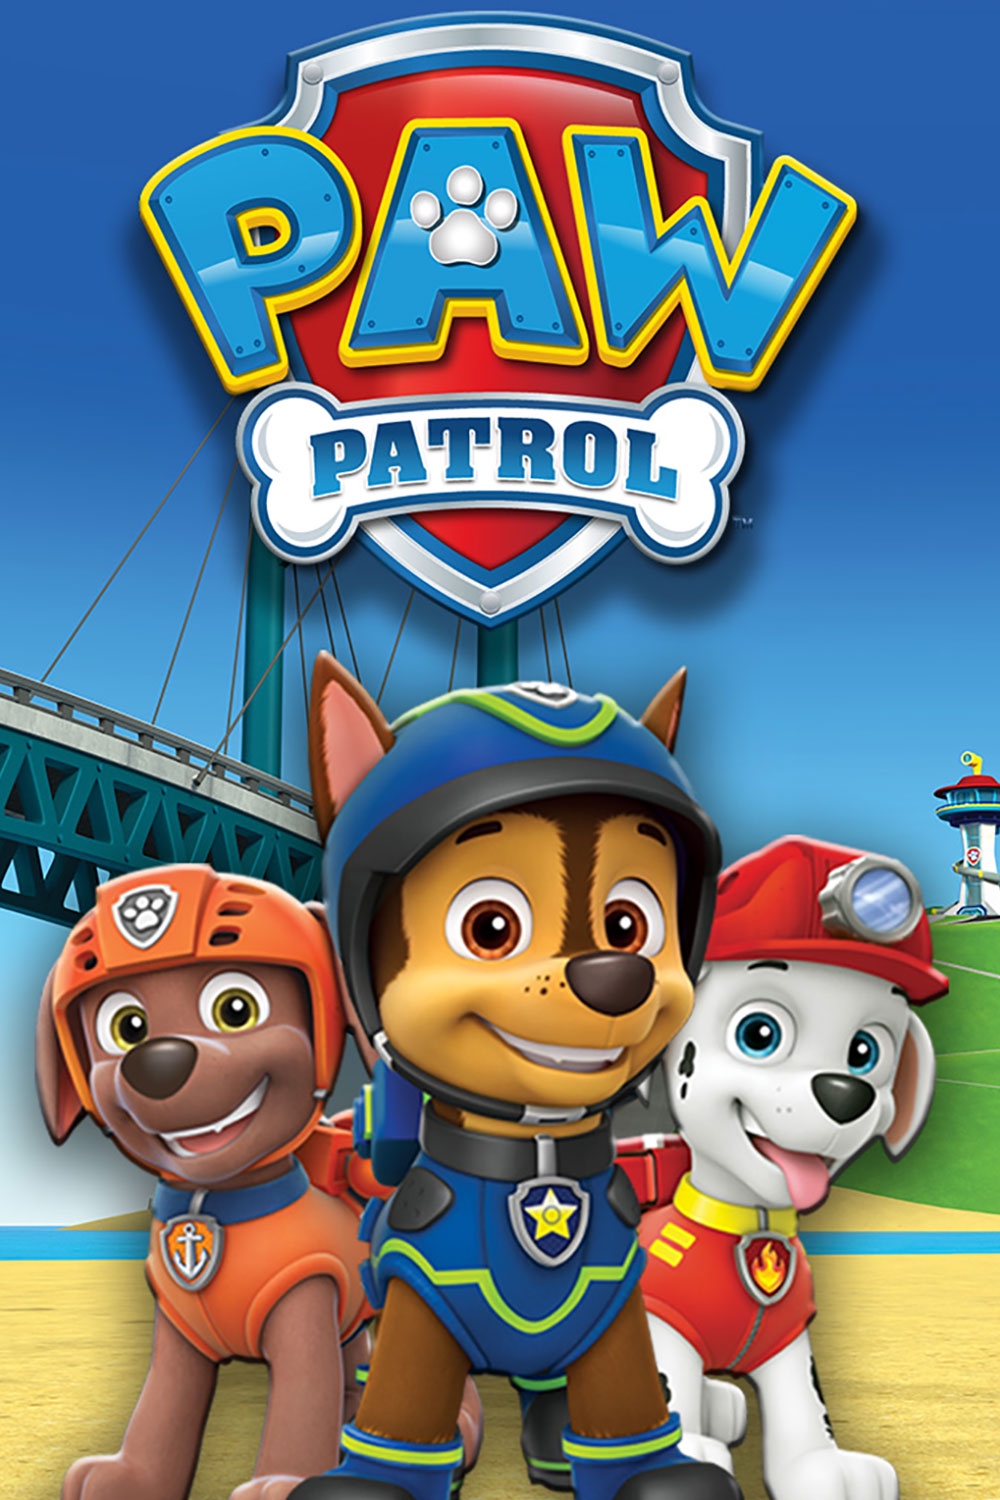 paw patrol streaming online free